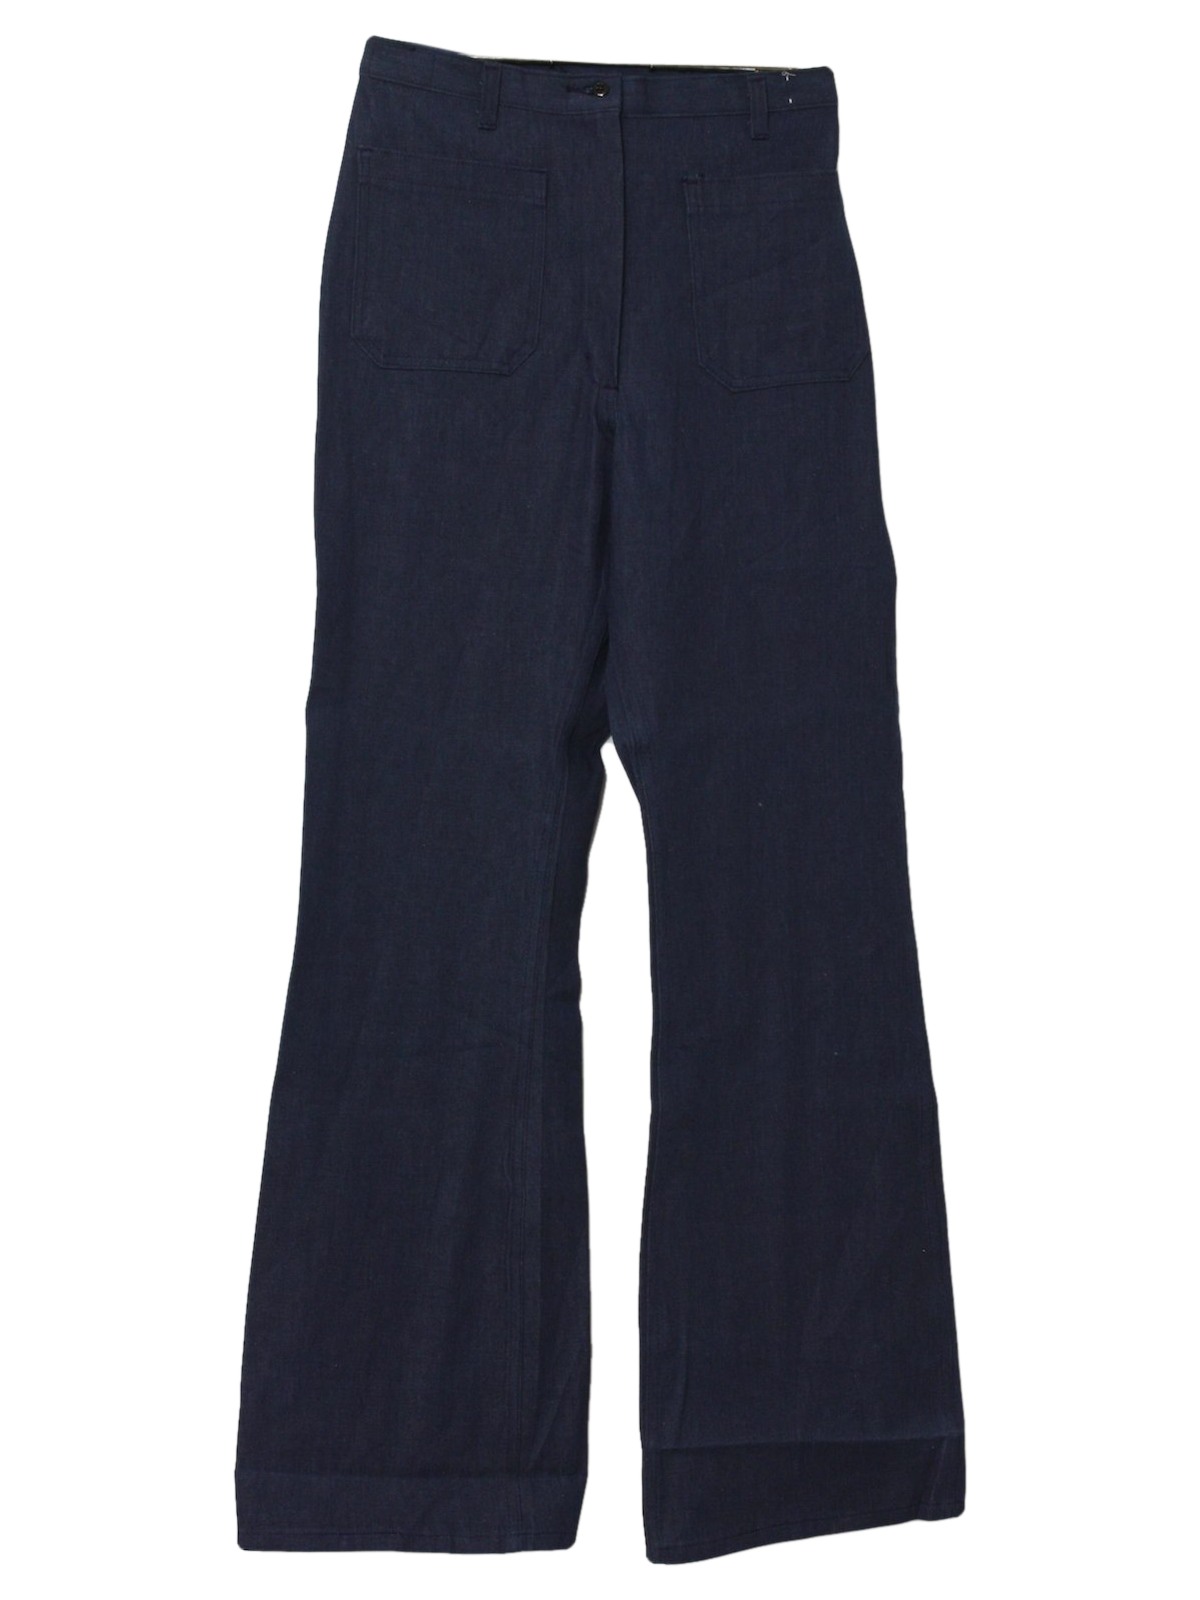 80s Retro Bellbottom Pants: 80s -Navdungaree- Womens dark blue cotton ...